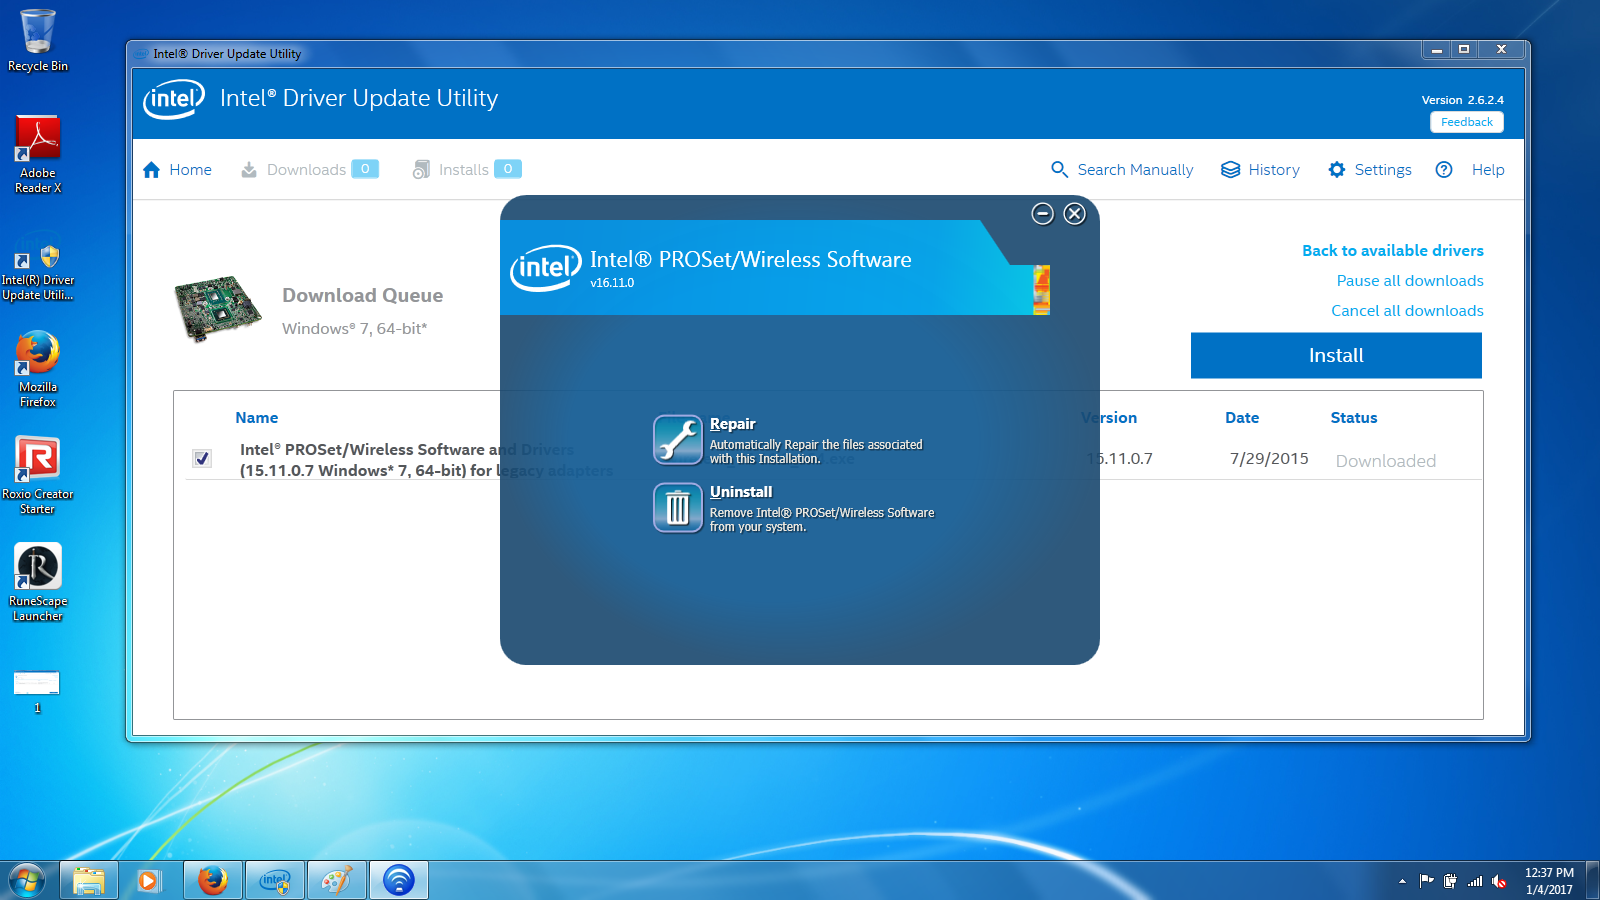 Intel core graphics driver. Intel Driver update. Intel Driver последняя версия. Утилита Интел. Intel Driver update Utility installer.